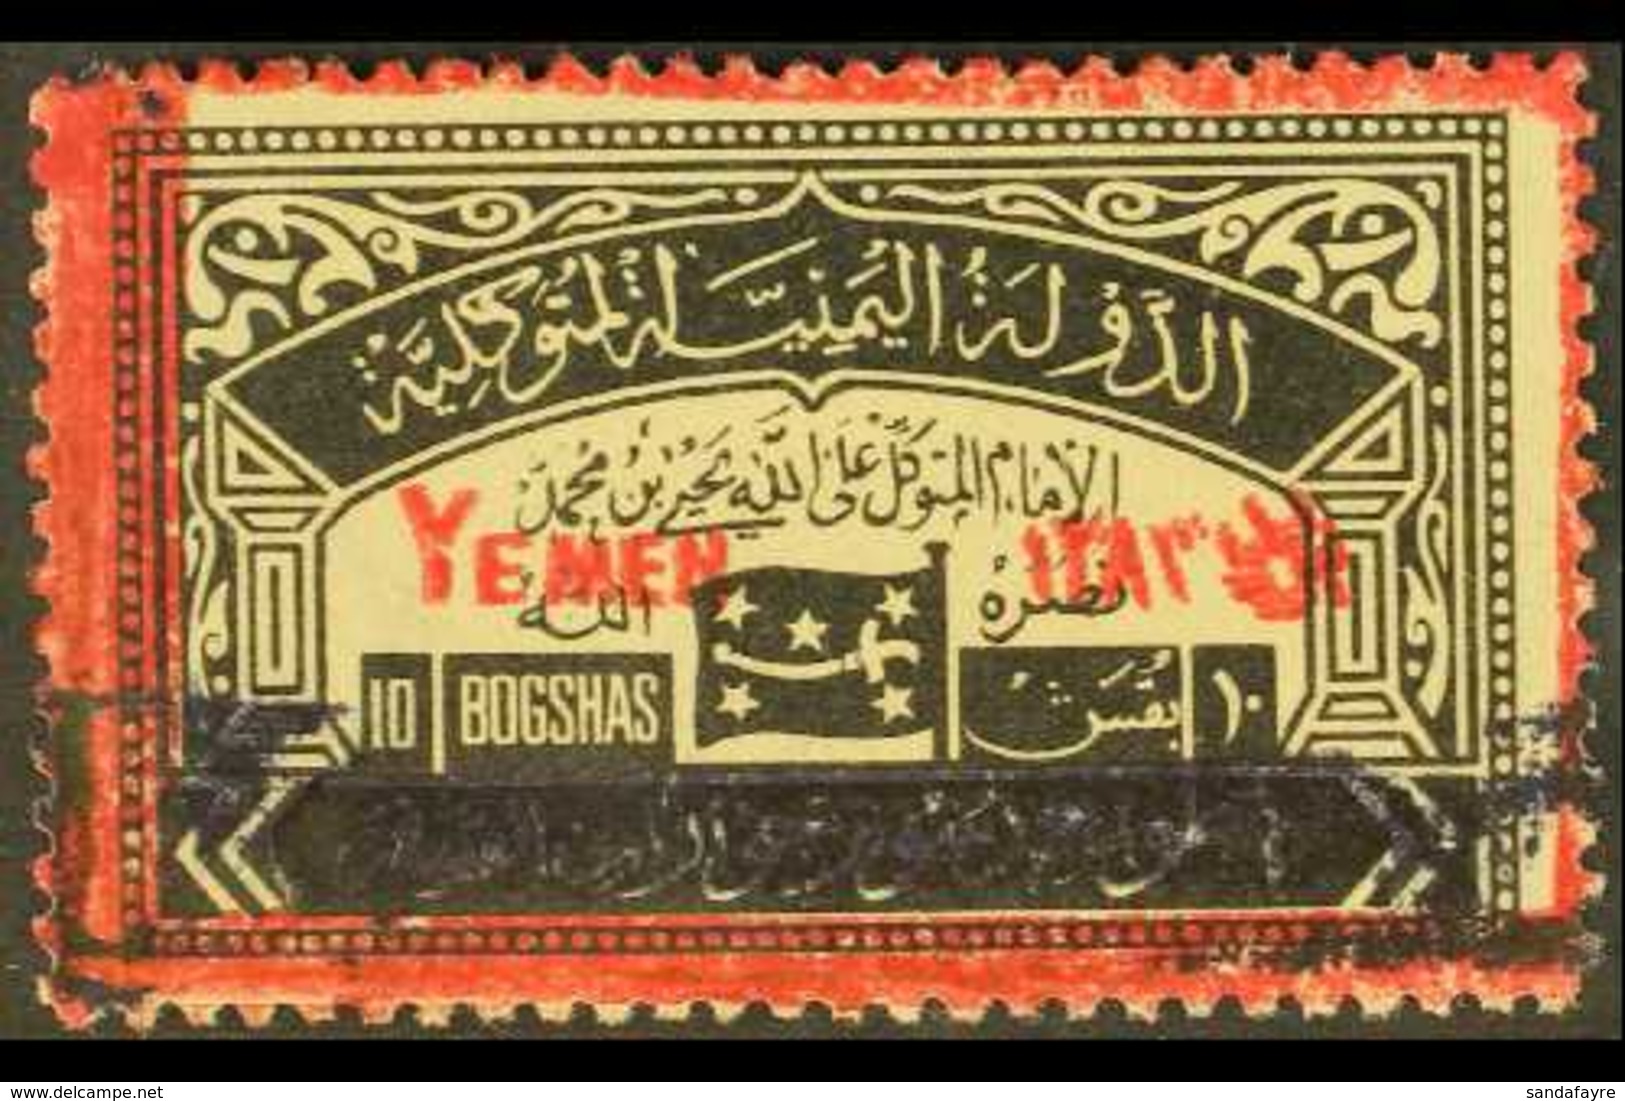 ROYALIST CIVIL WAR ISSUES  1963 10b Black And Carmine, Consular Stamp Overprinted "Yemen" And "Postage 1383" In Orange R - Yémen